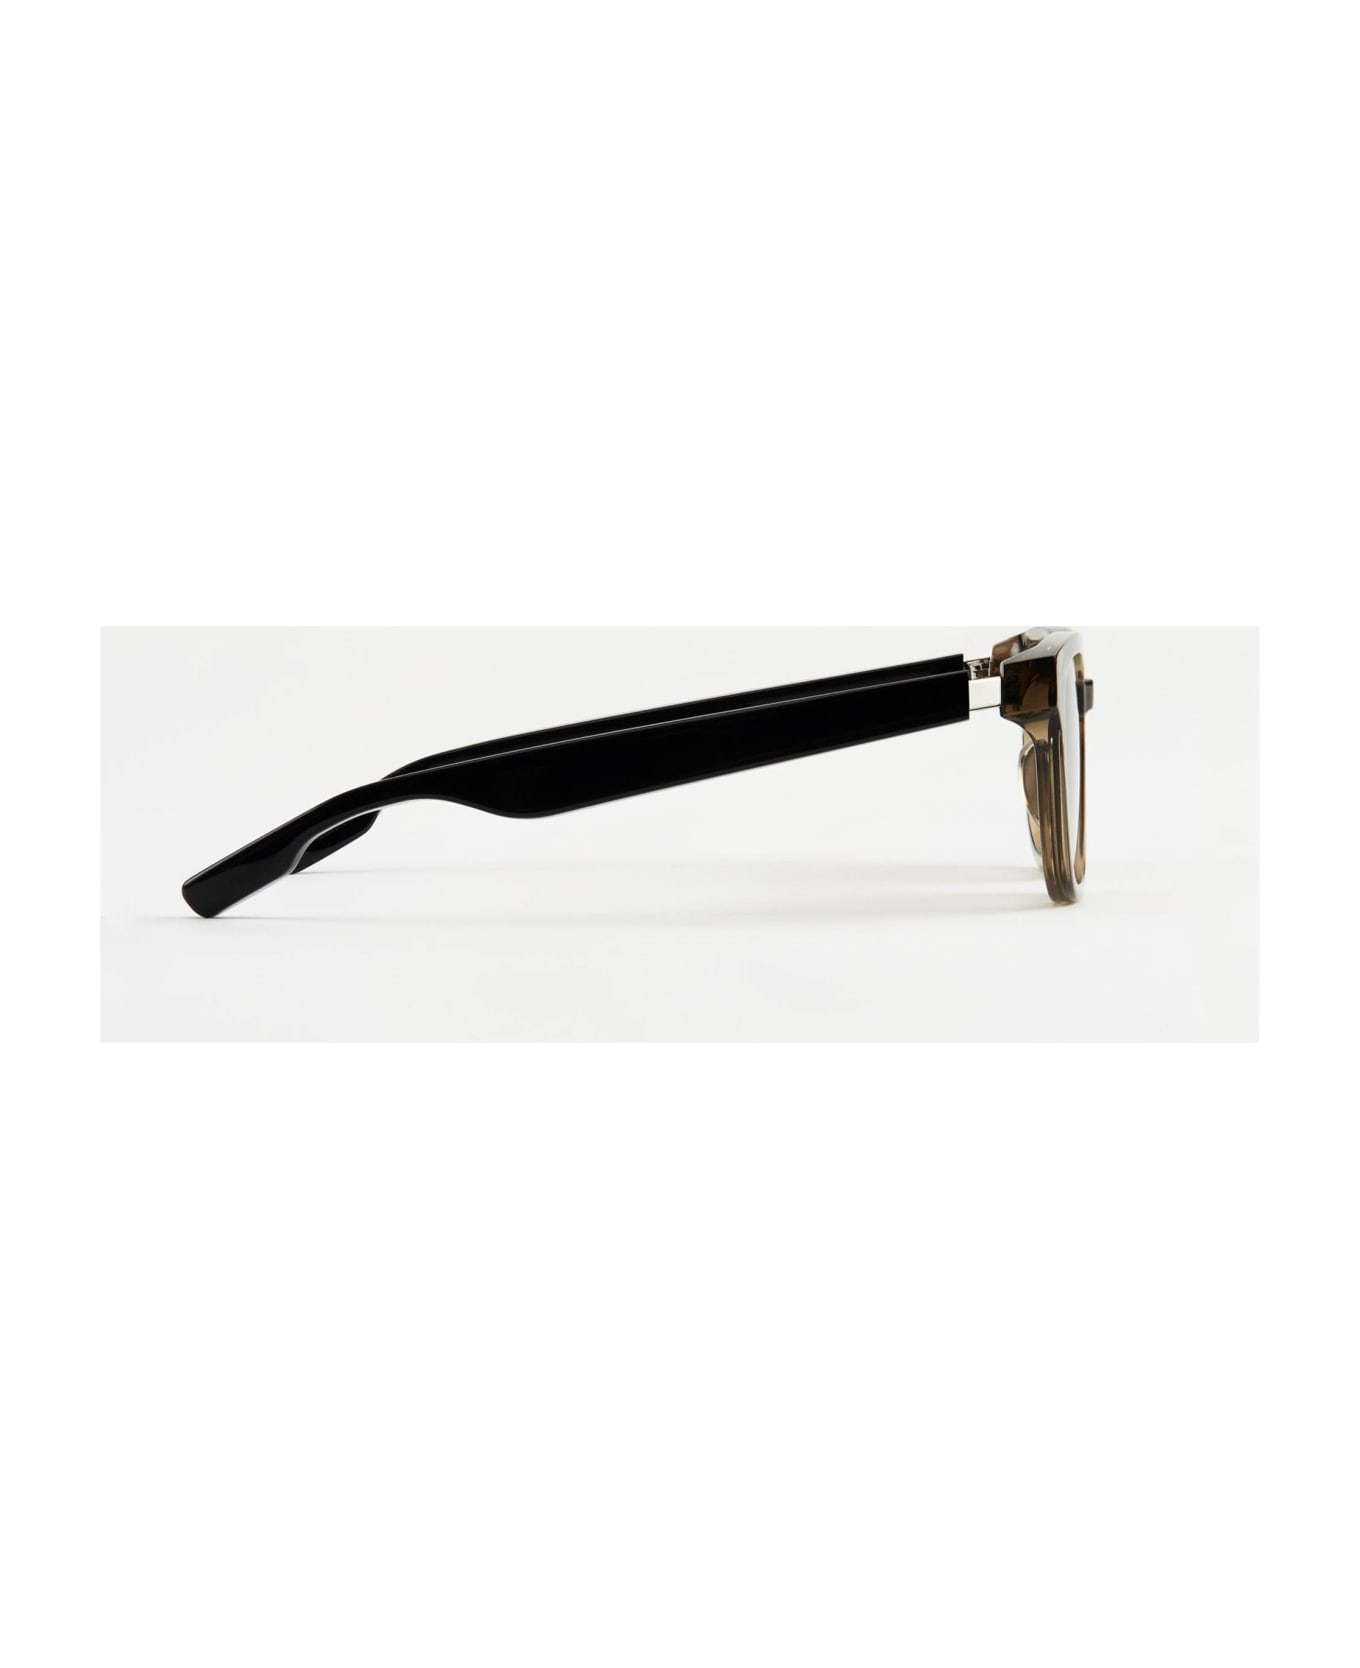 Aether Model S1 - Smoke Brown Sunglasses - brown サングラス